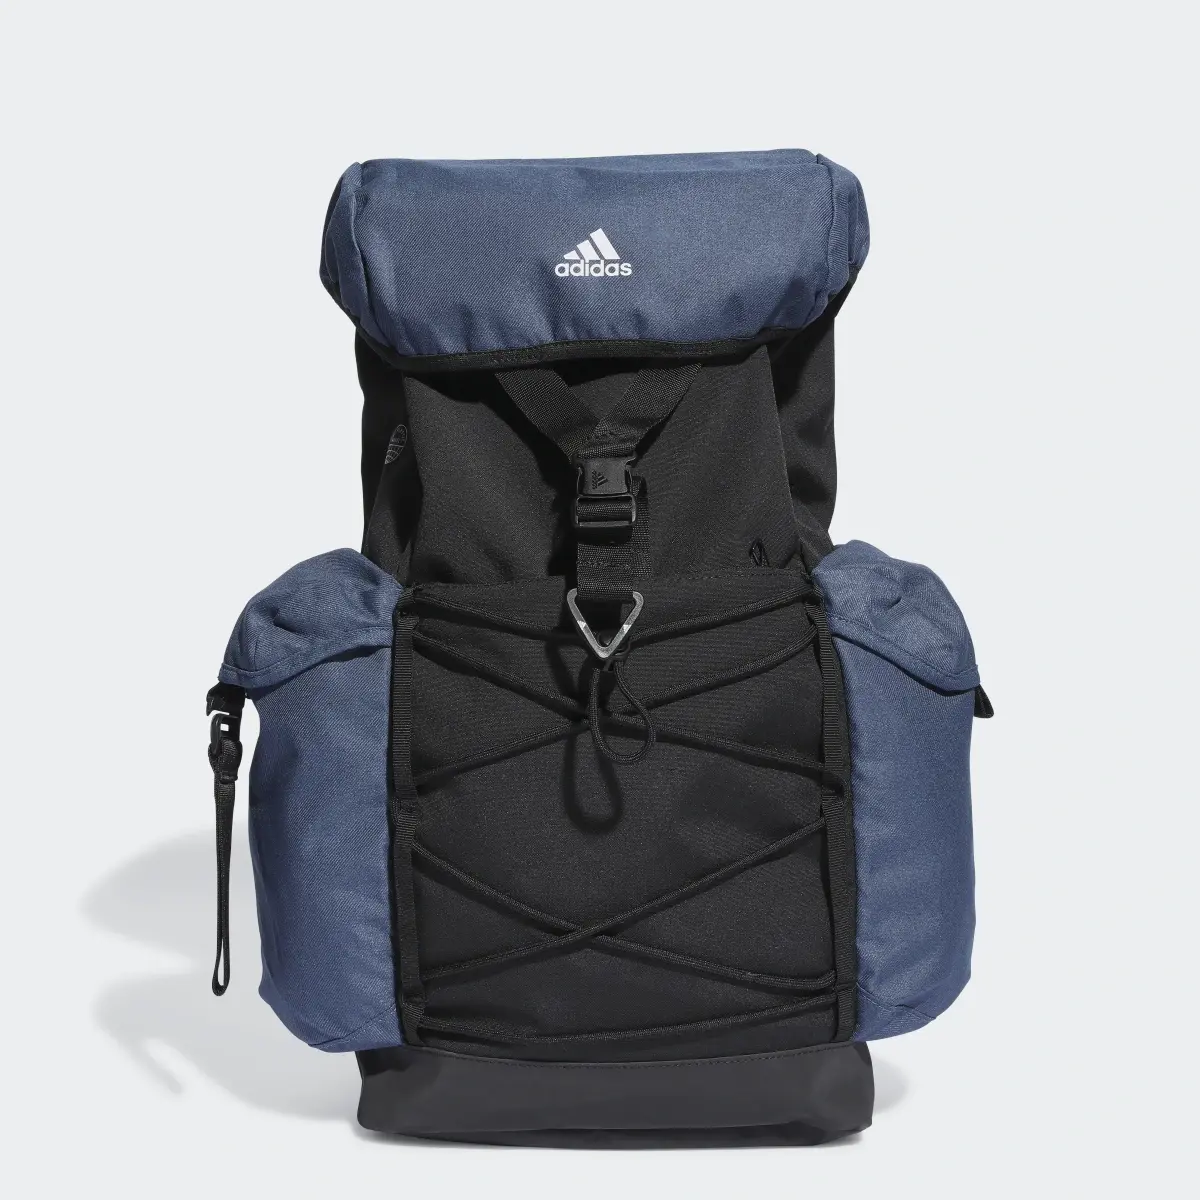 Adidas City Xplorer Backpack. 1